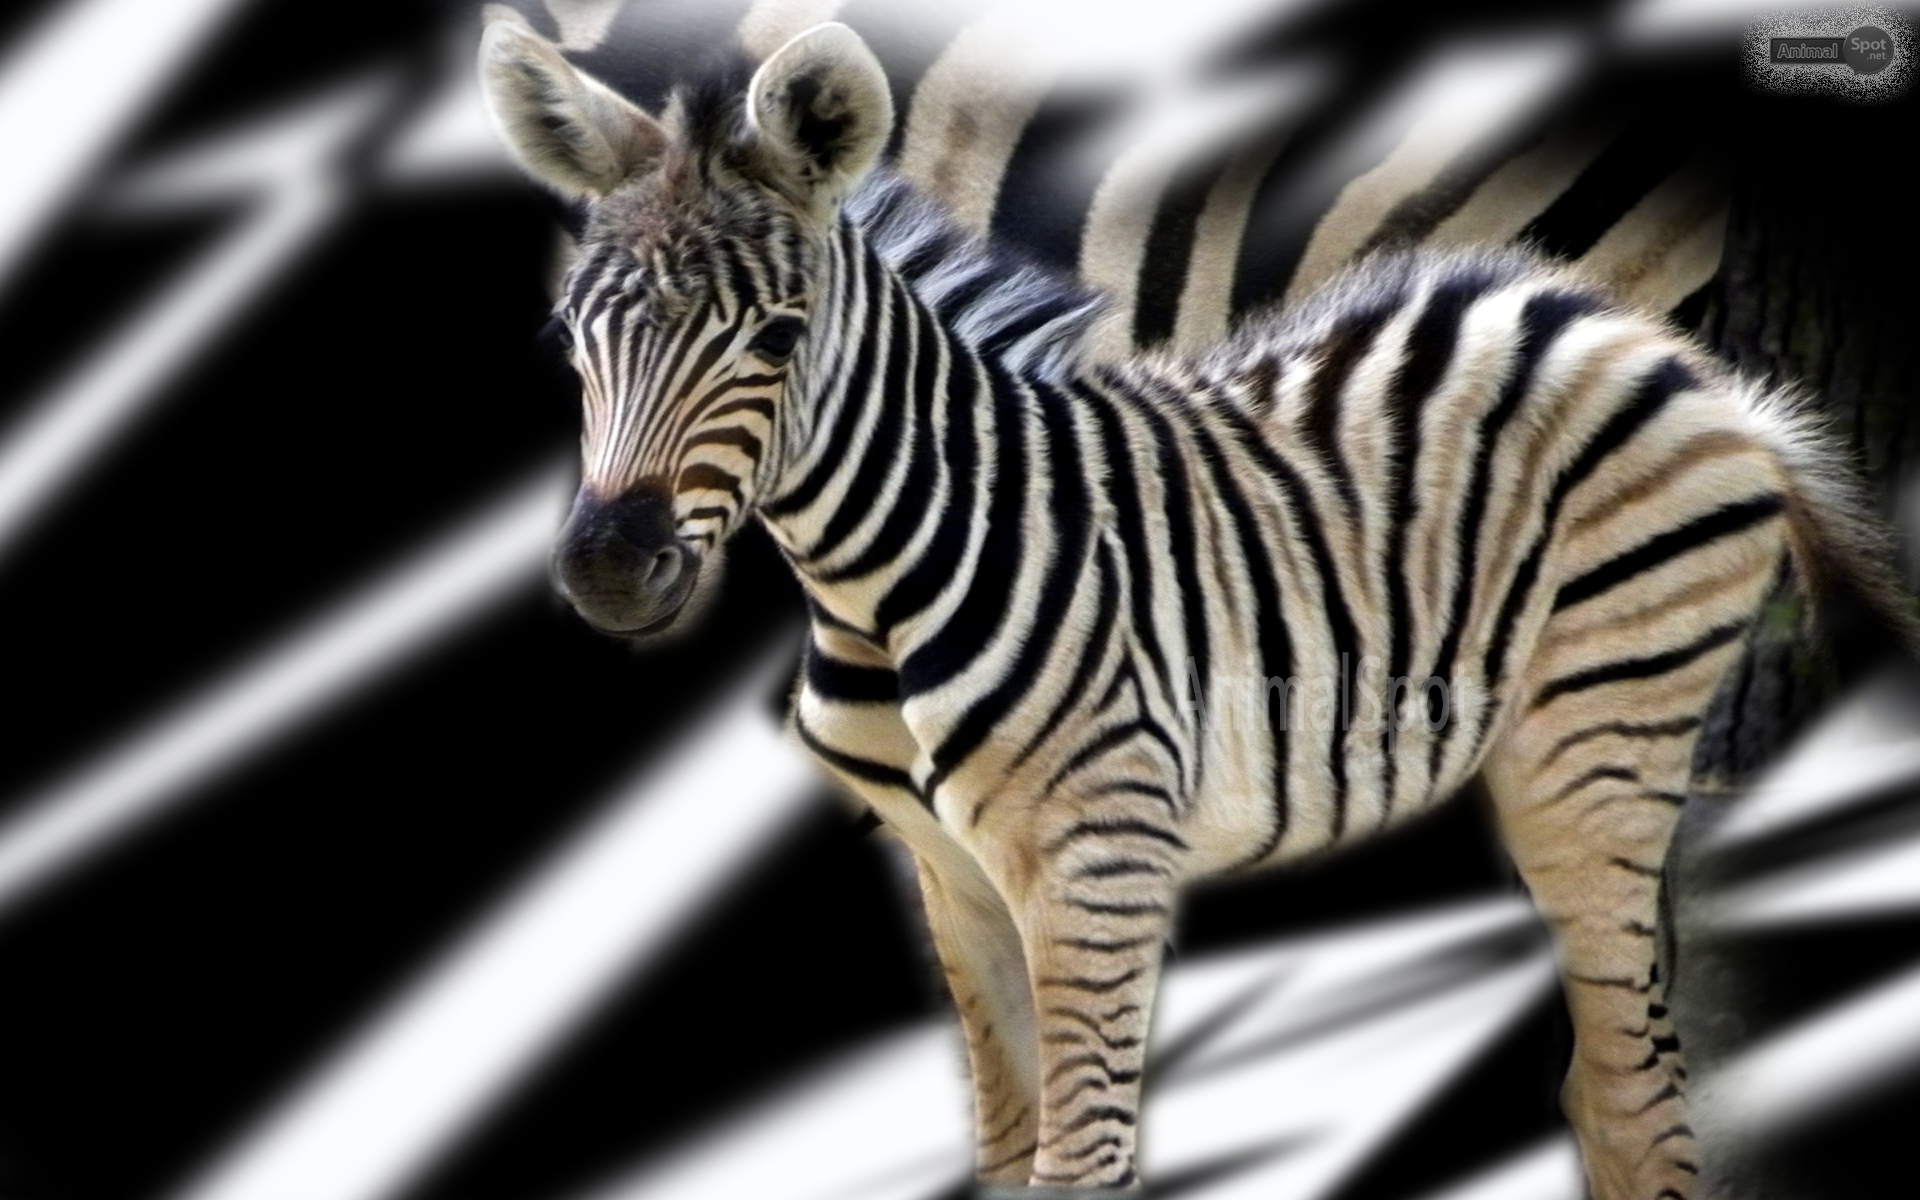 Zebra Wallpaper Desktop